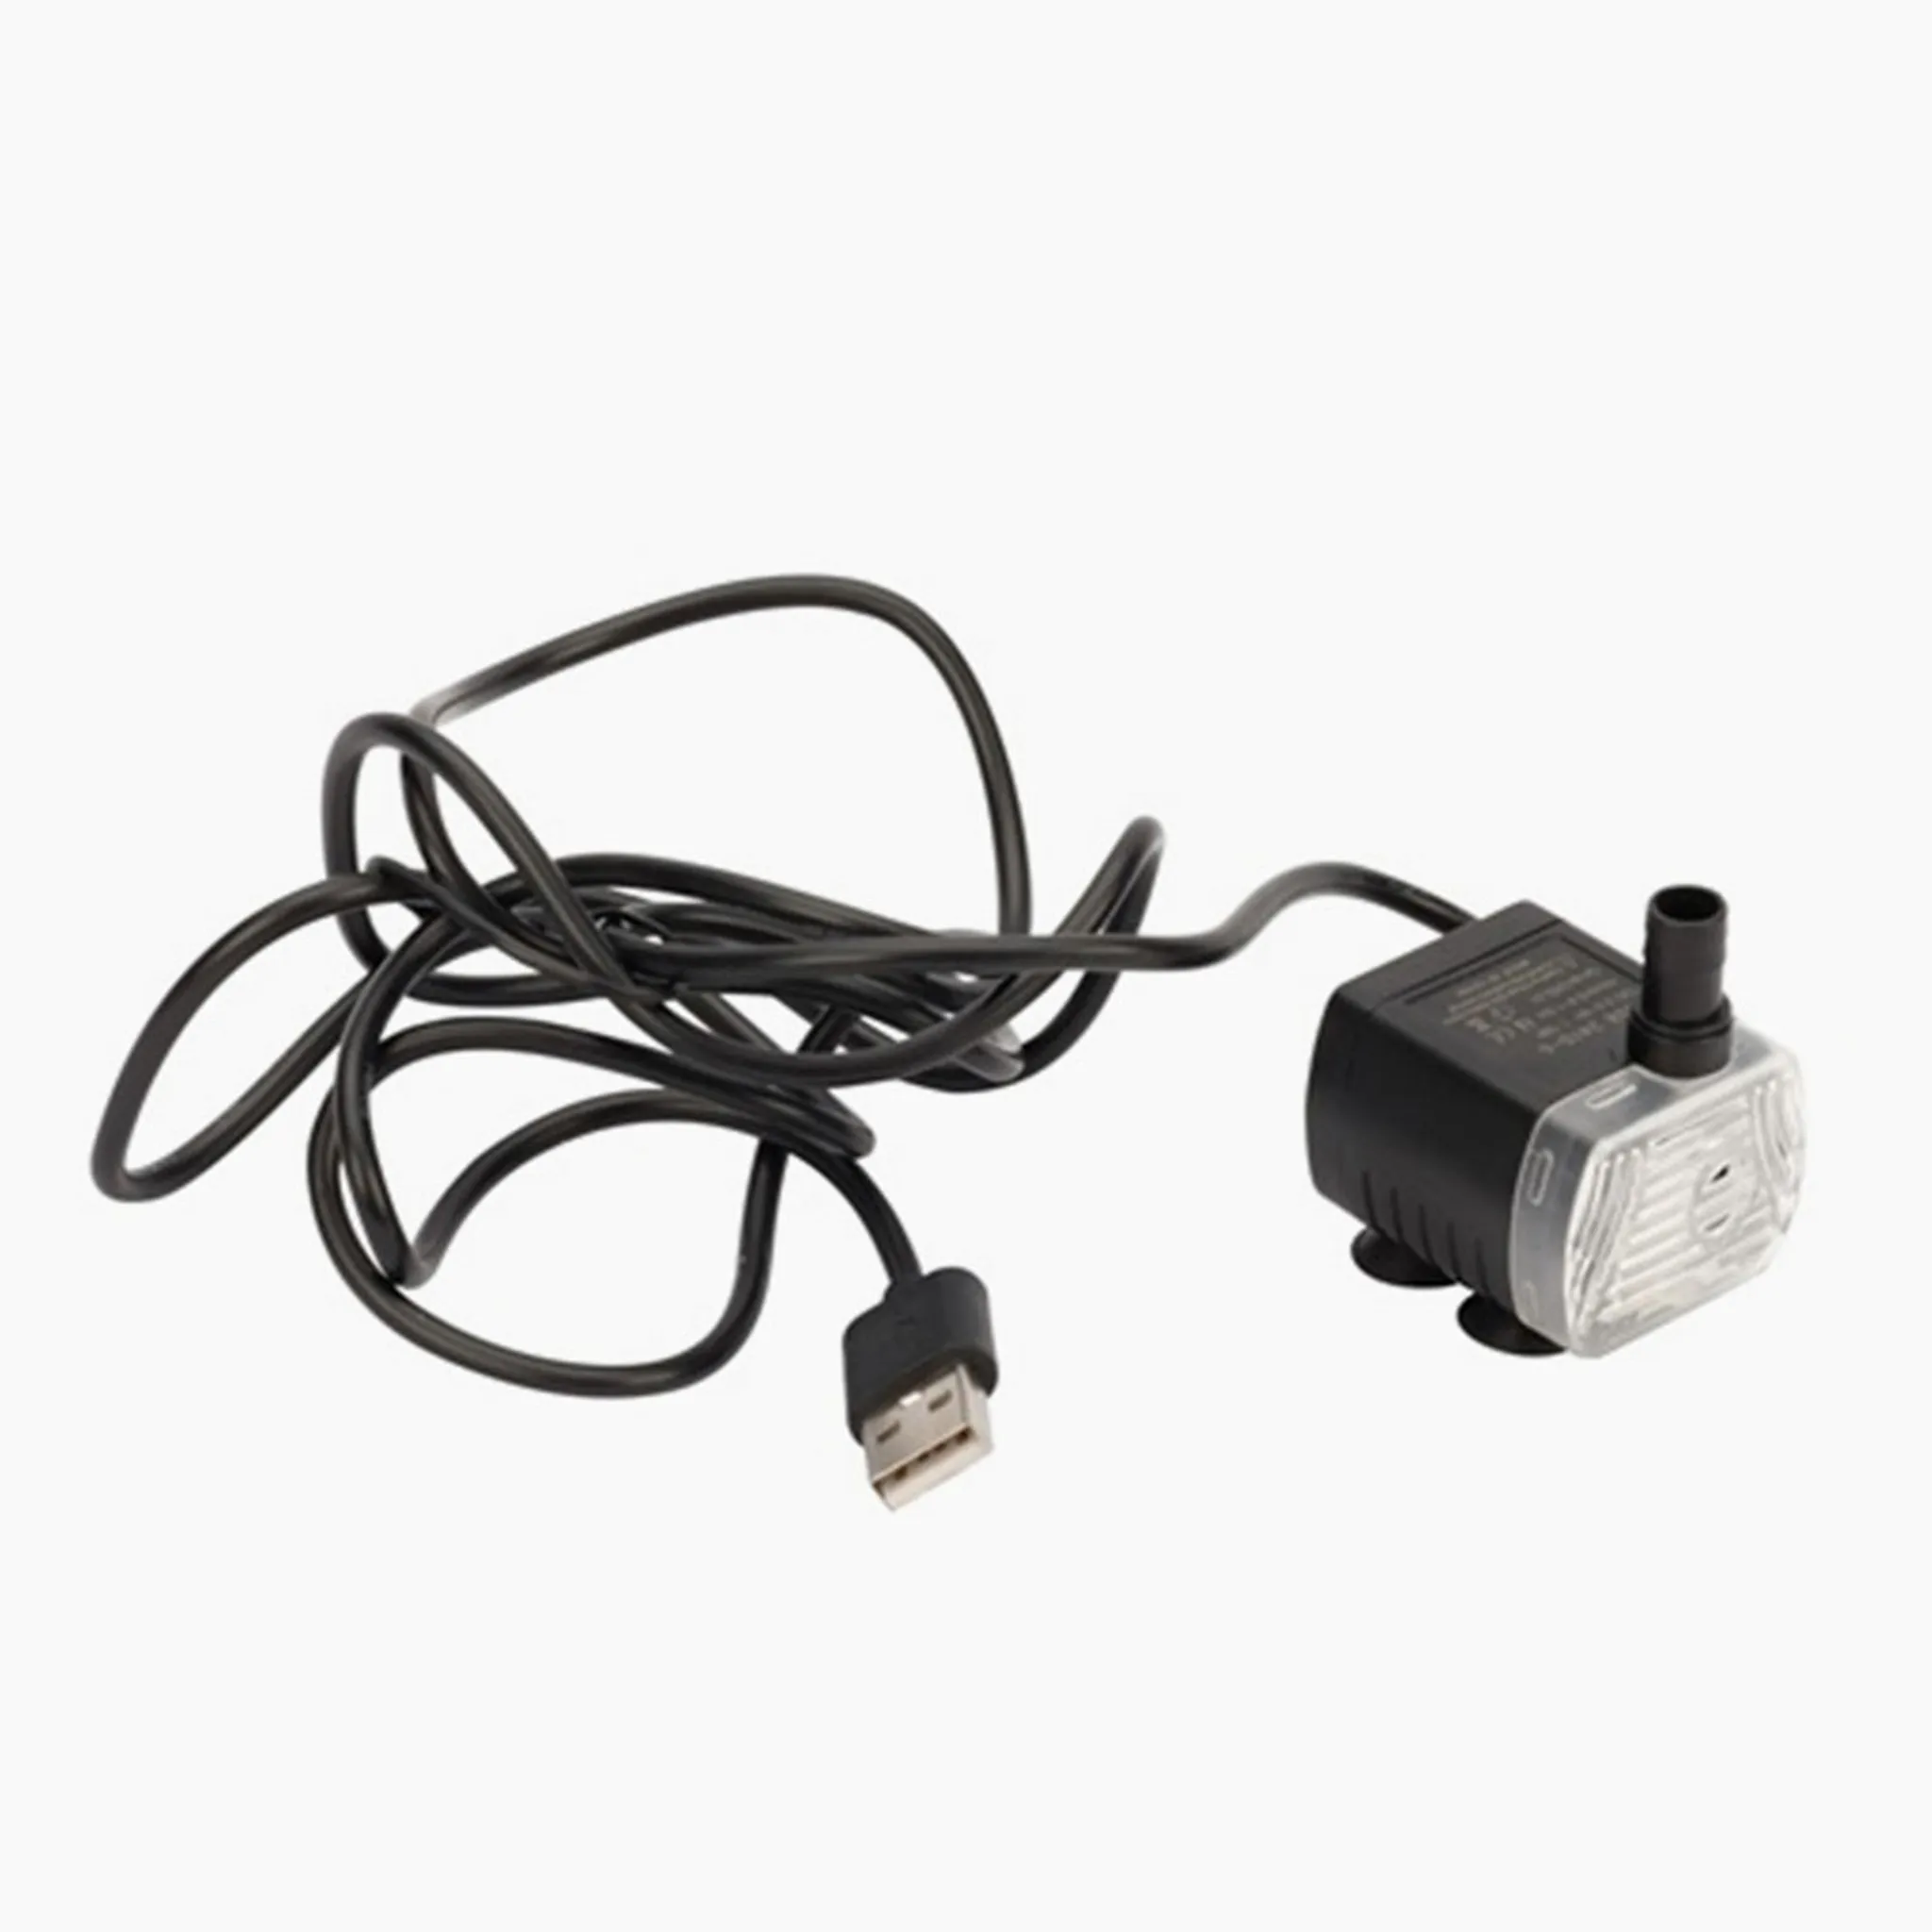 Catit Ersatz-USB-Pumpe für CATIT